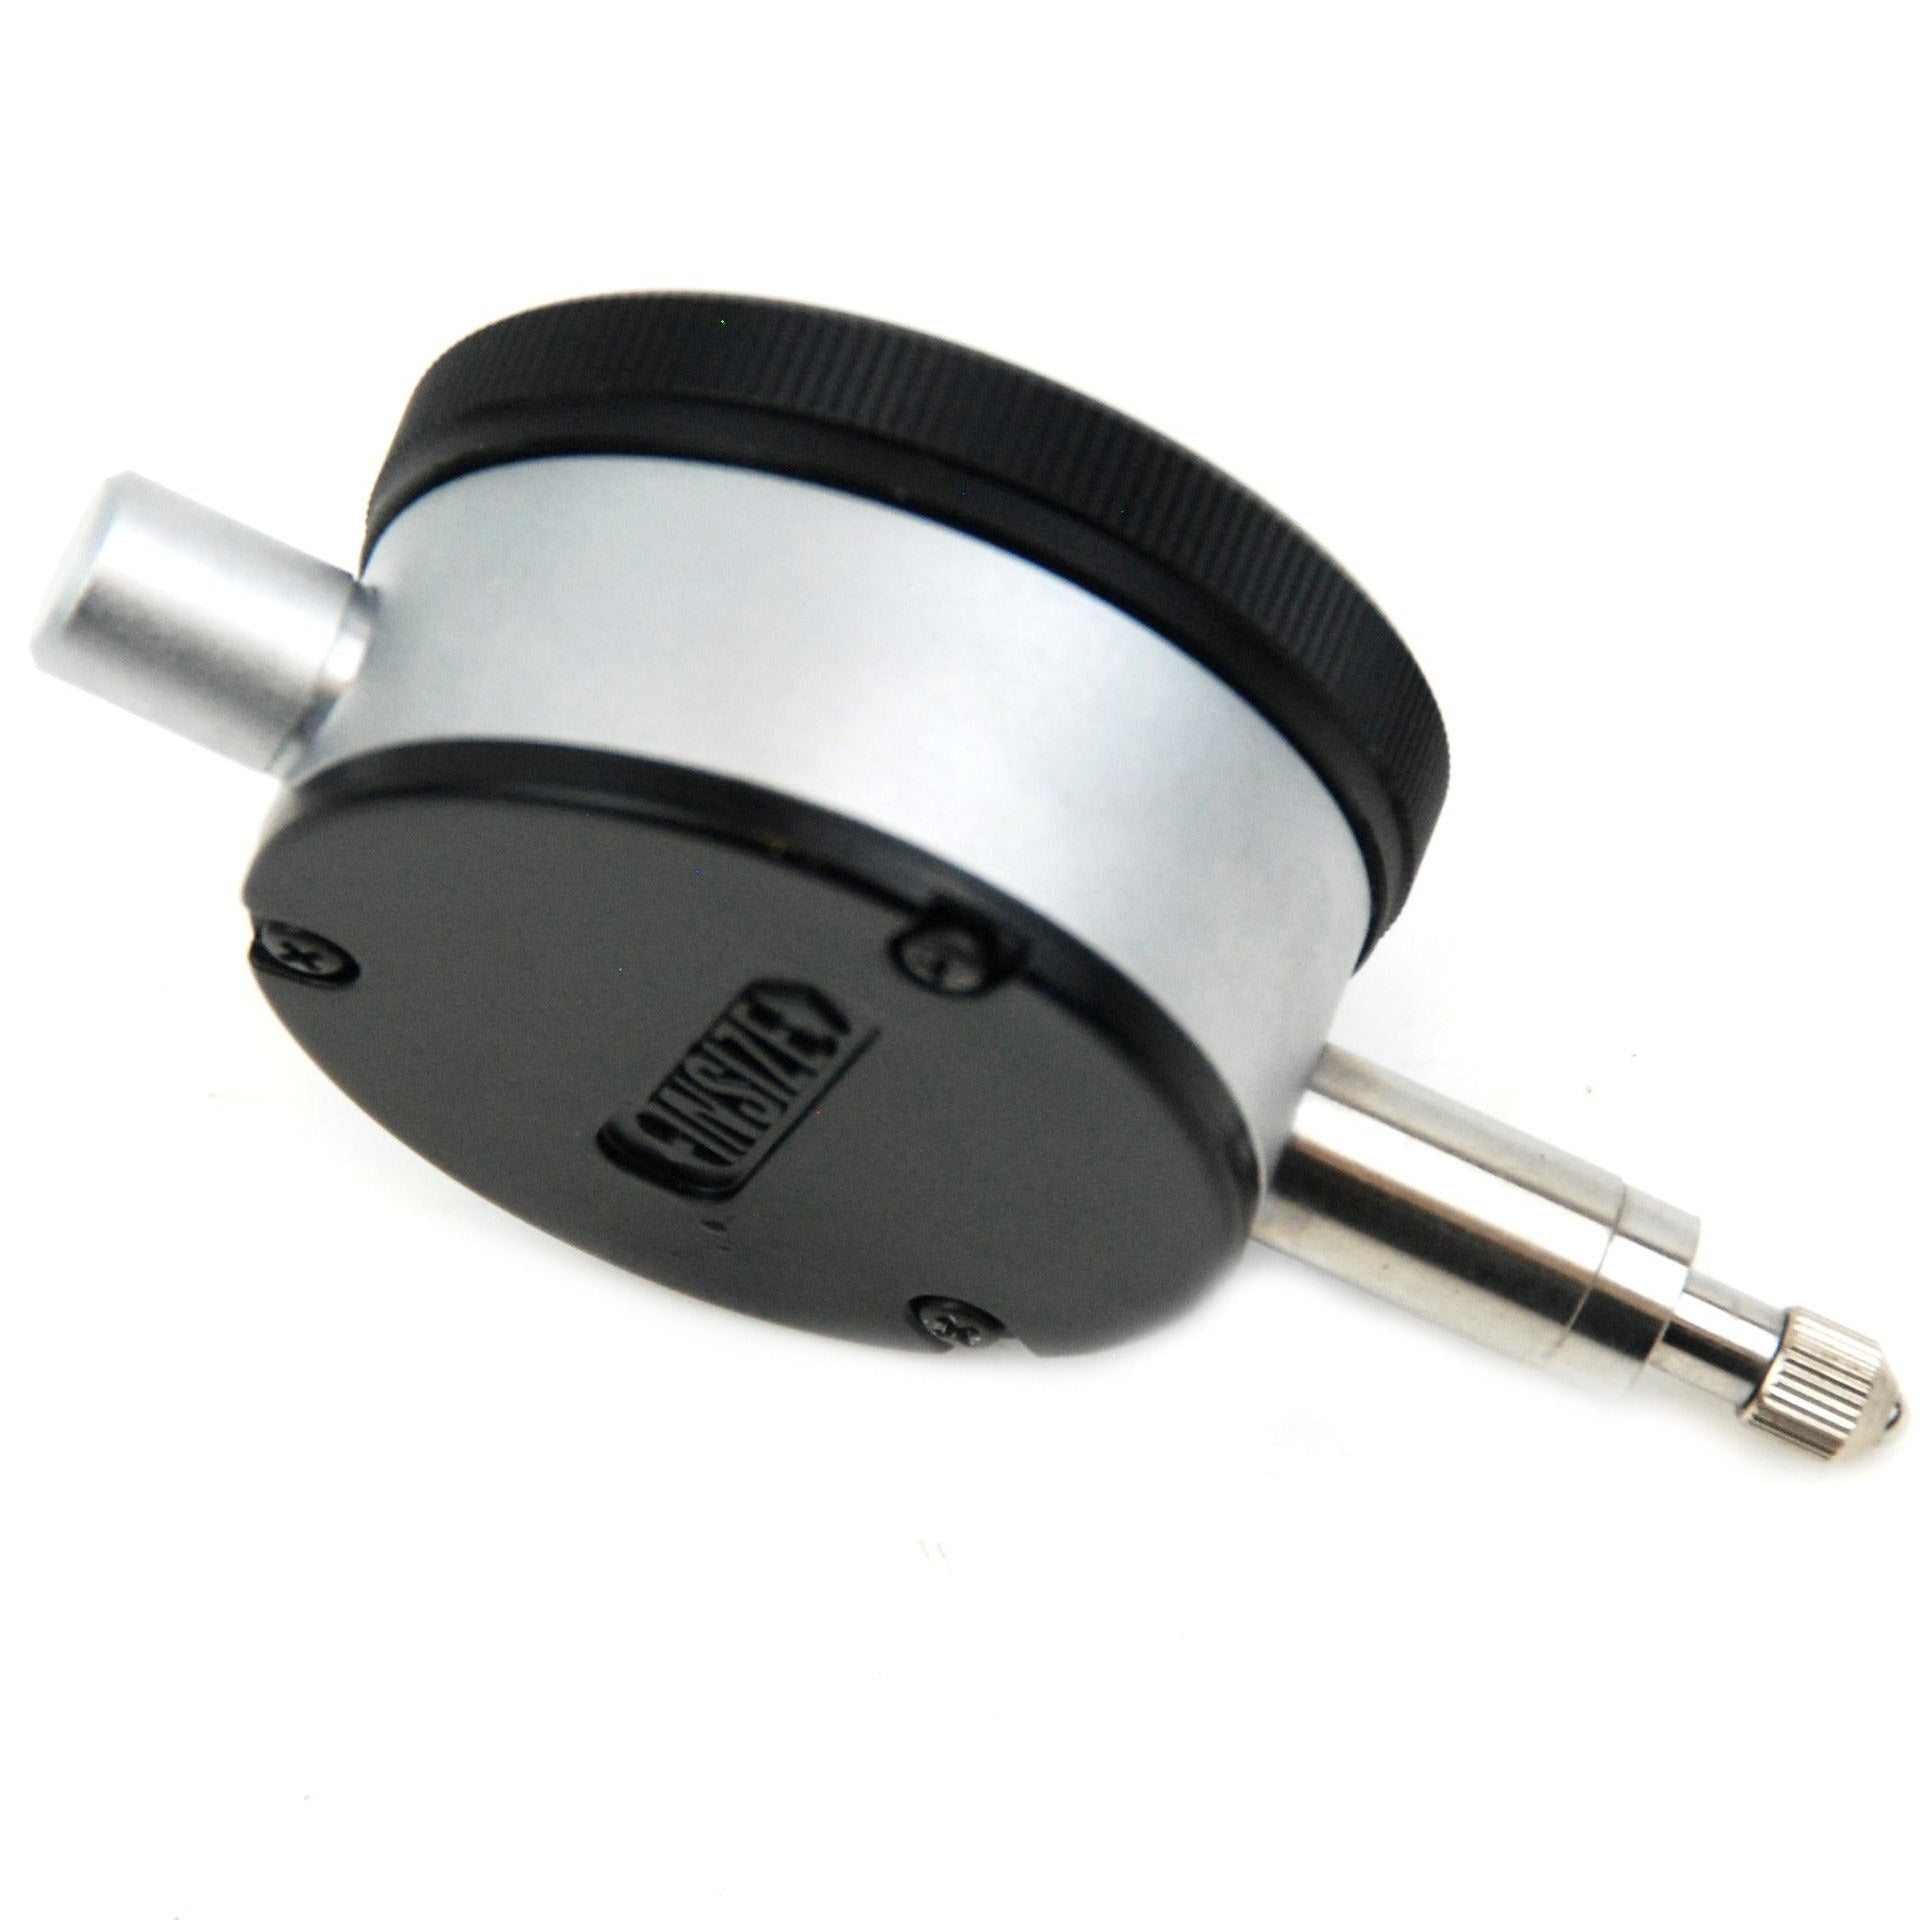 Insize Metric Compact Dial Indicator 3mm Range Series 2311-3F